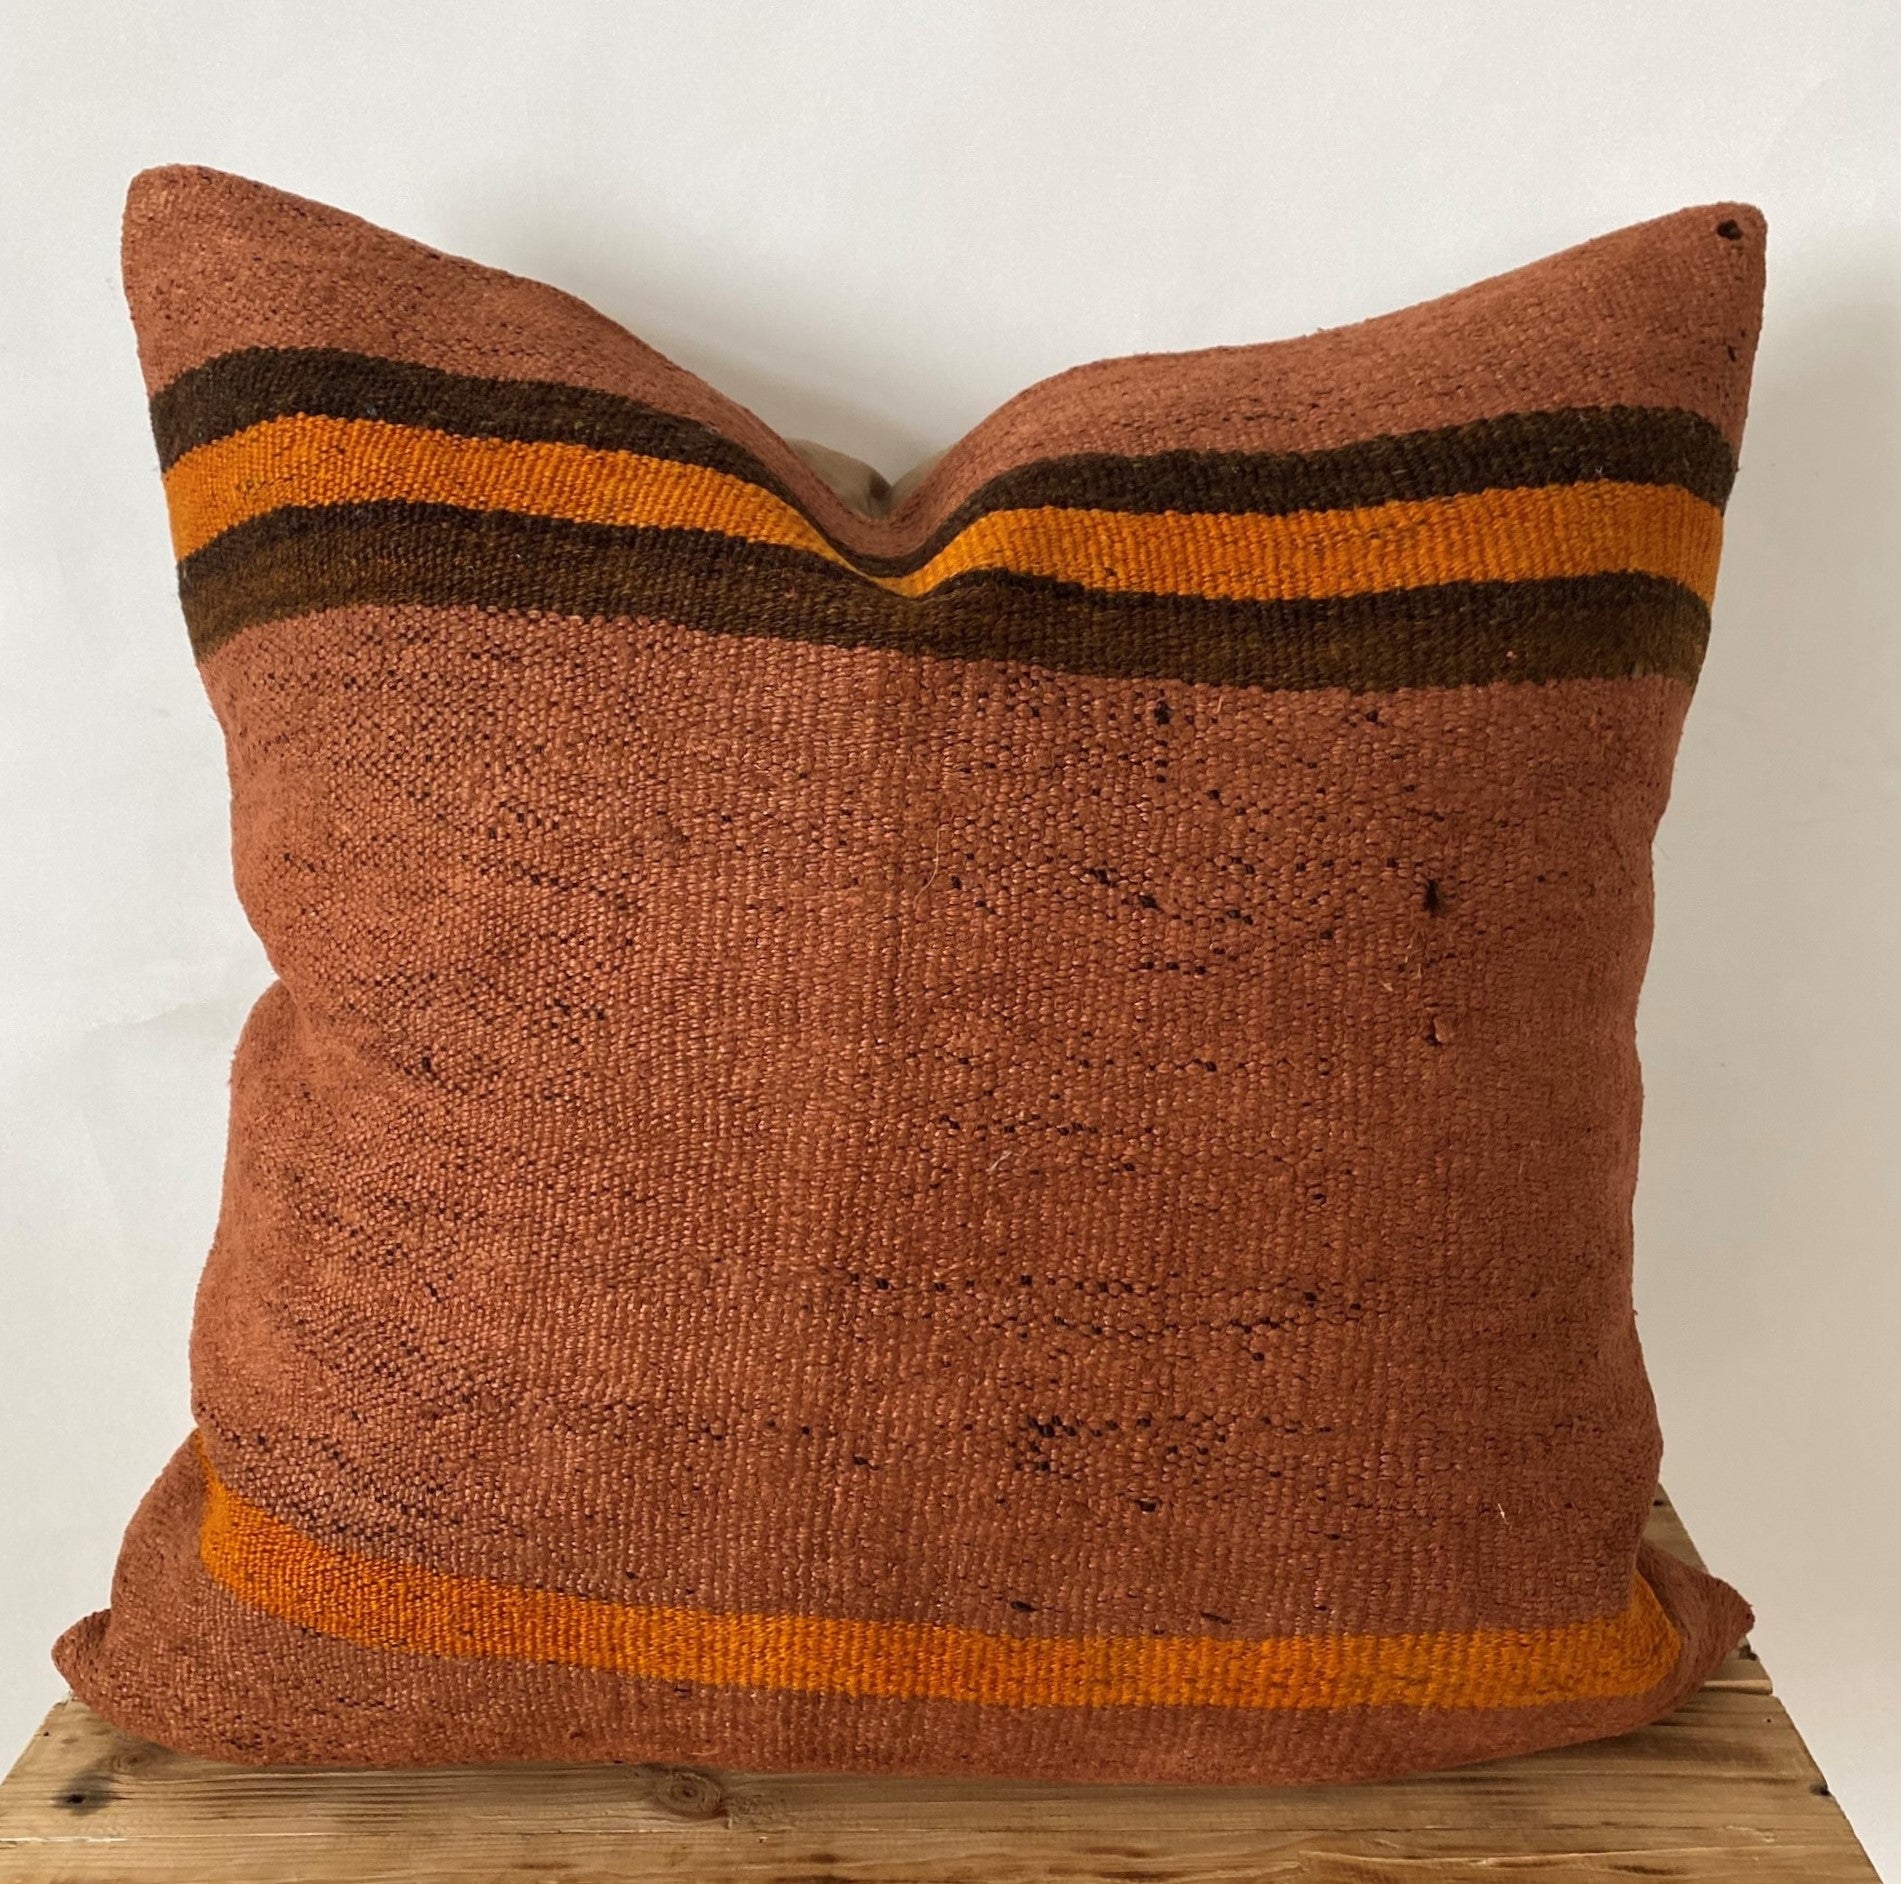 Alettah - Brick Hemp Pillow Cover - kudenrugs